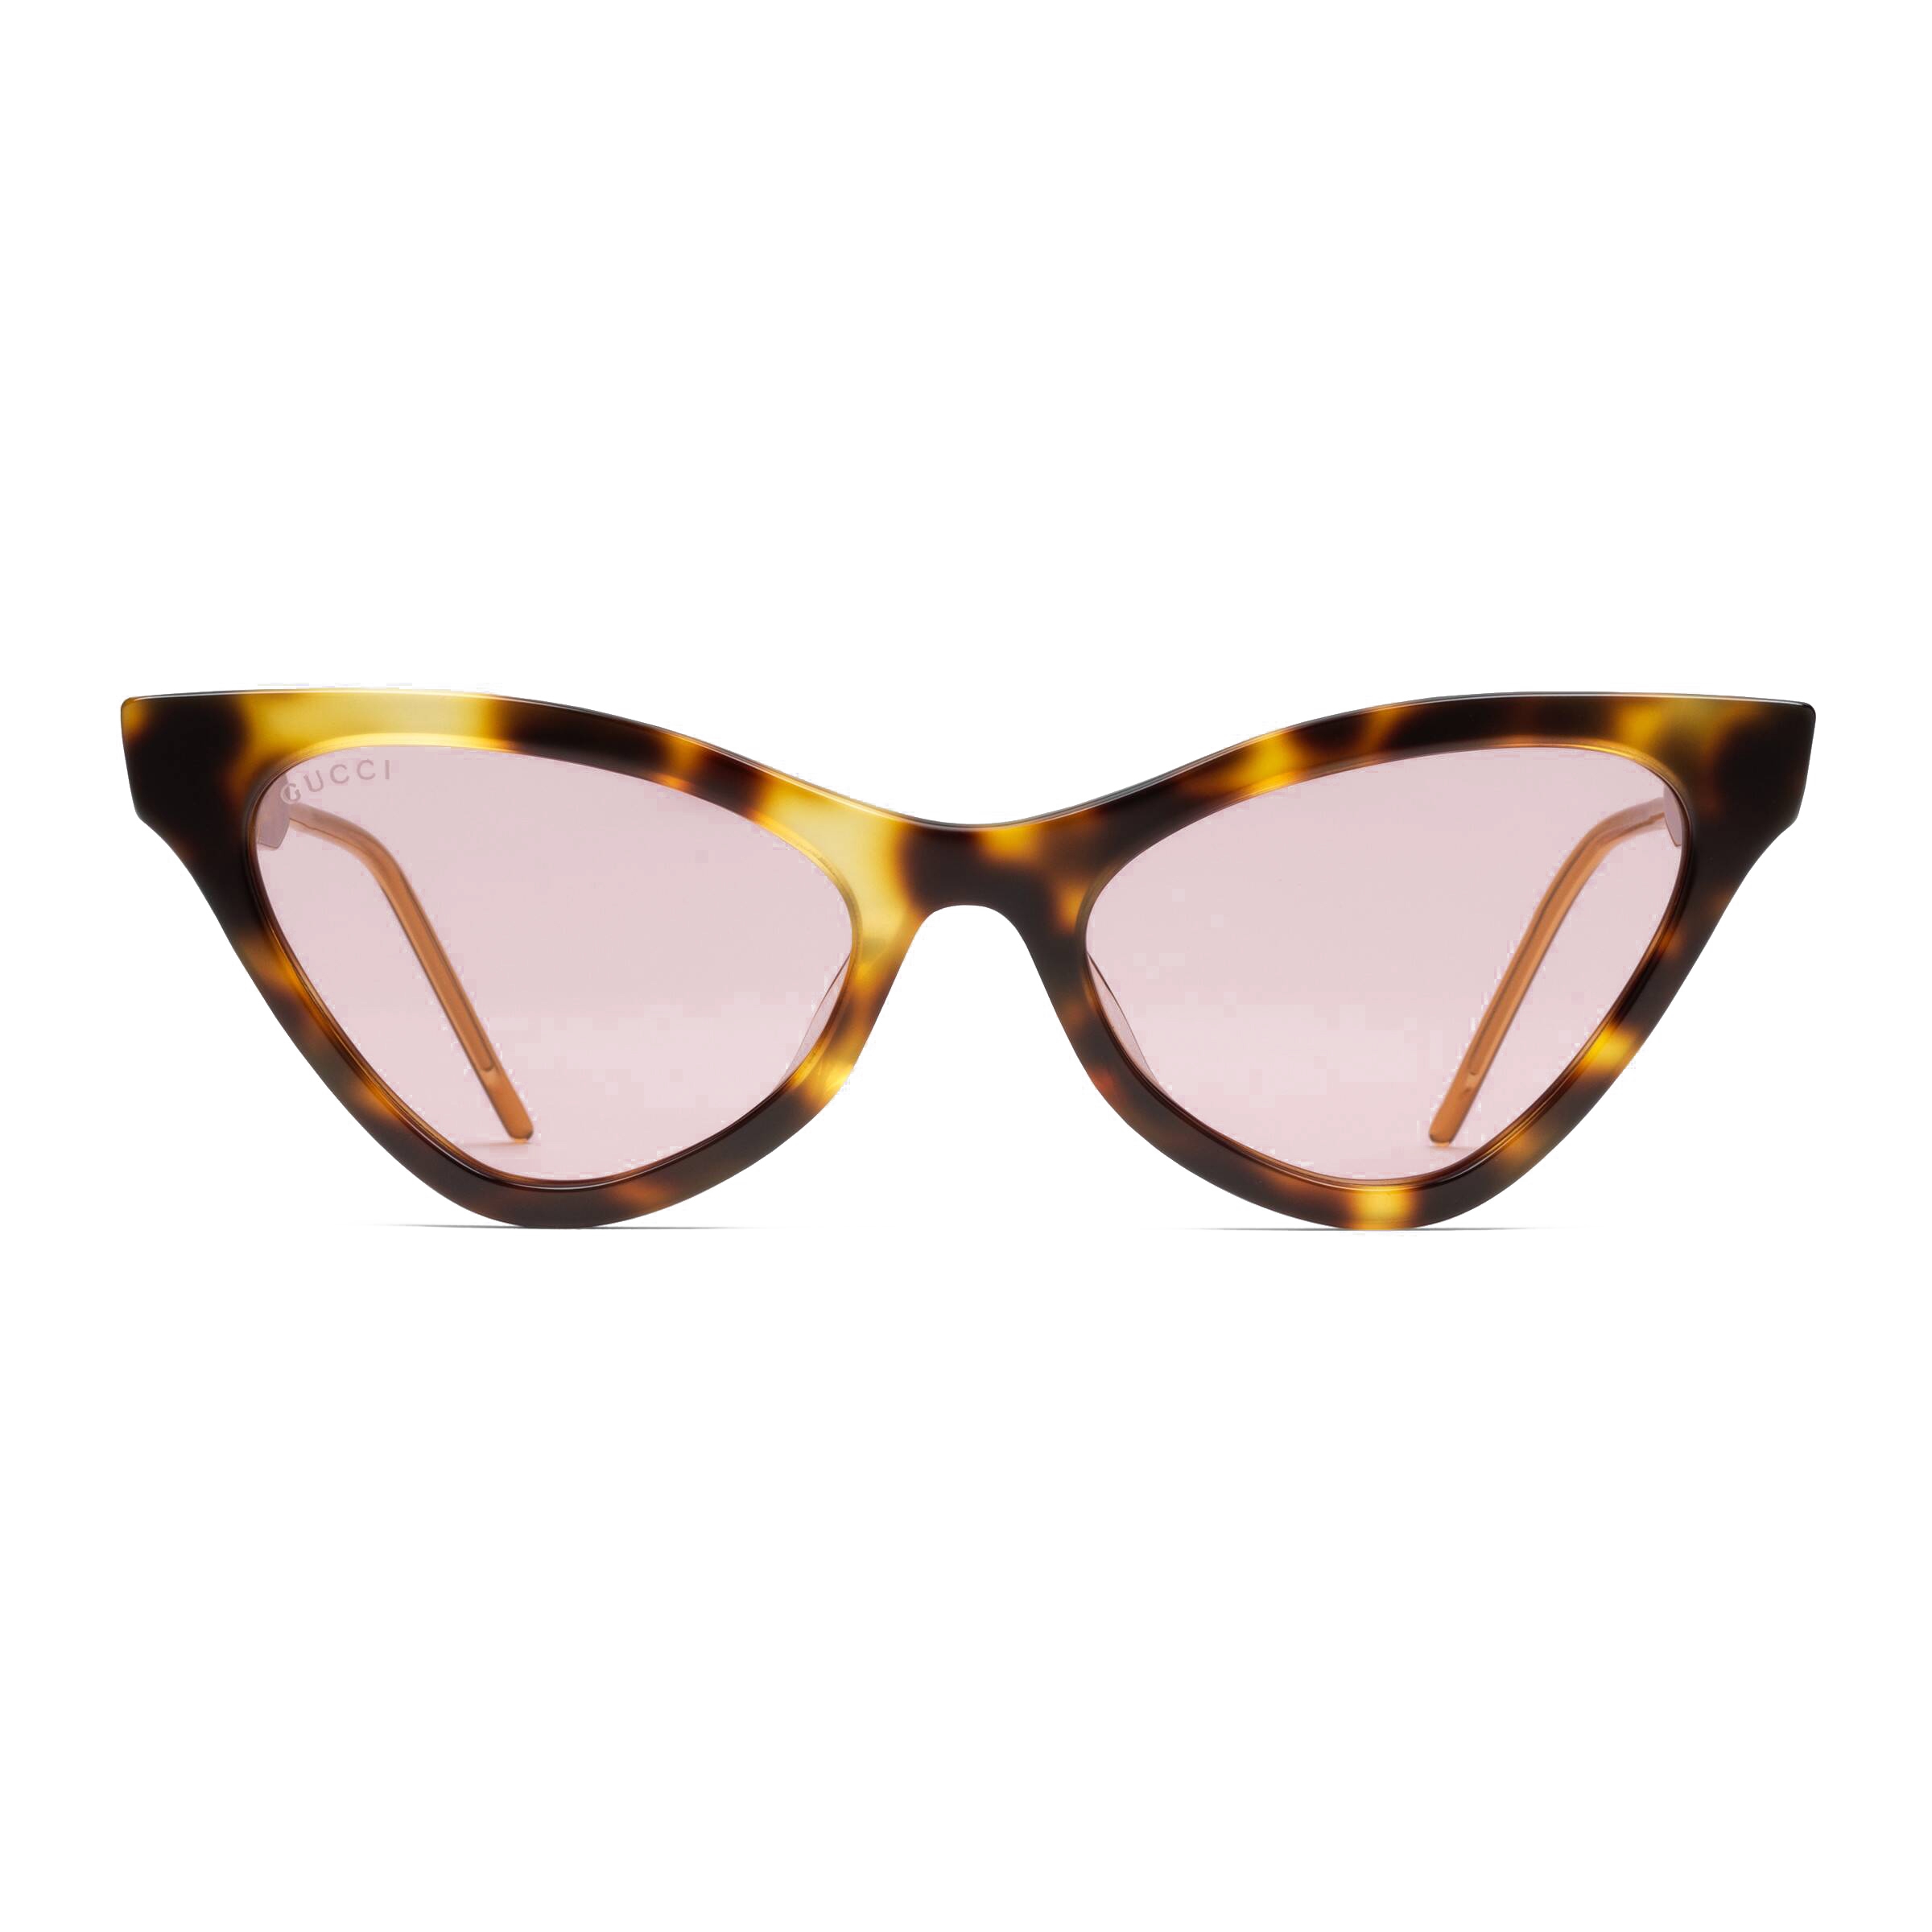 Gucci Cat Eye Sunglasses - Turtle - Gucci Eyewear - Avvenice